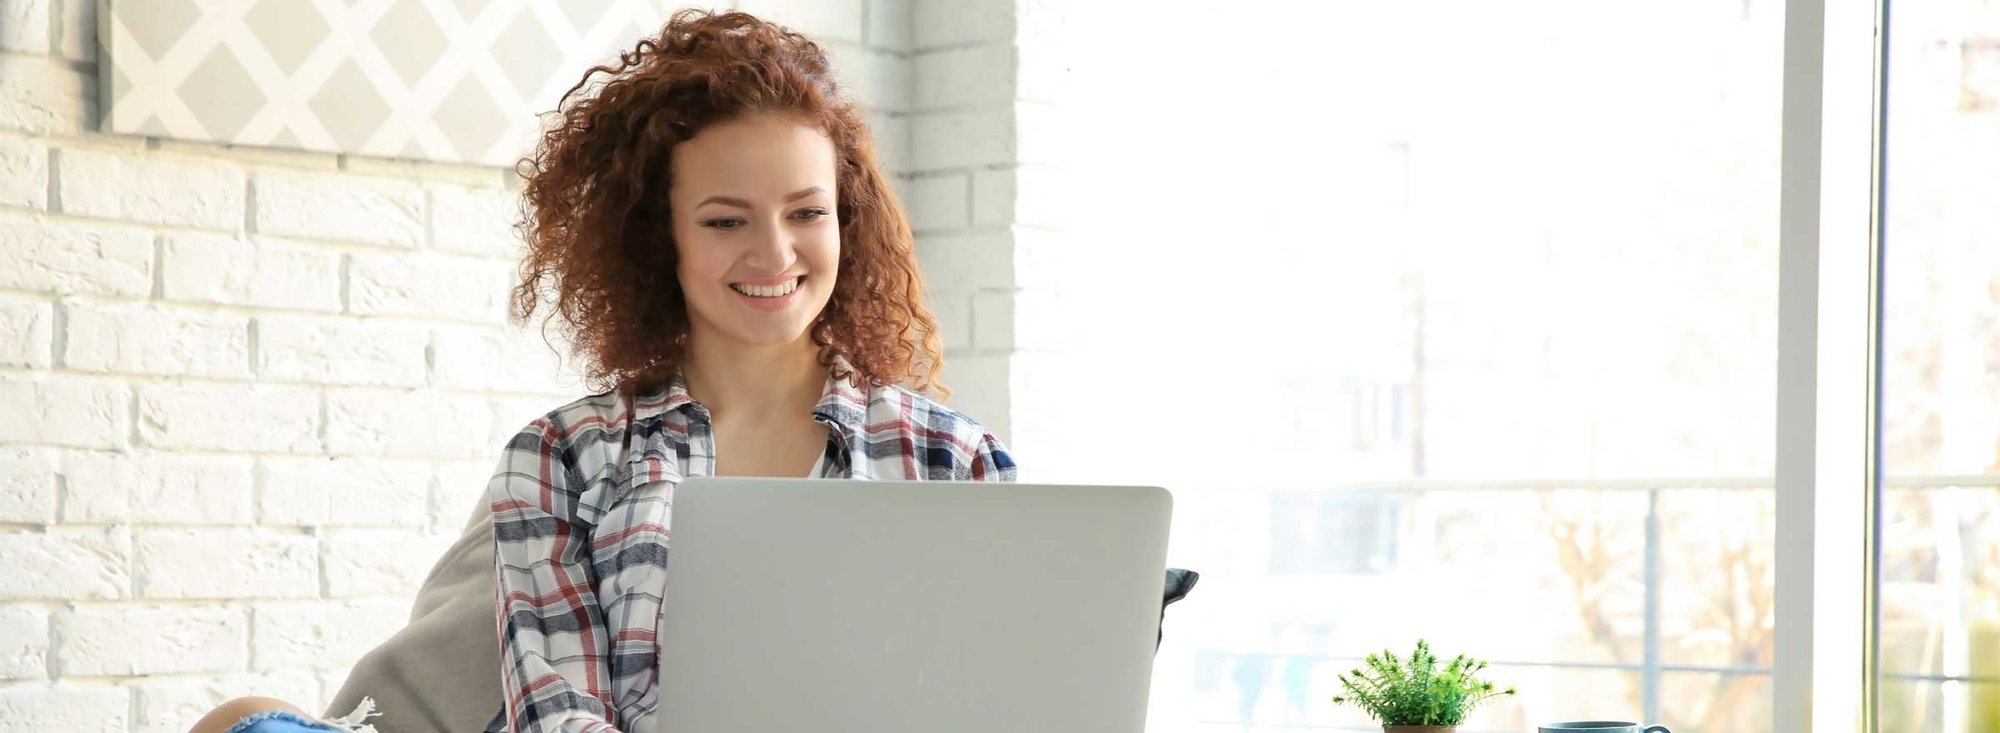 woman smiling at a computer screen